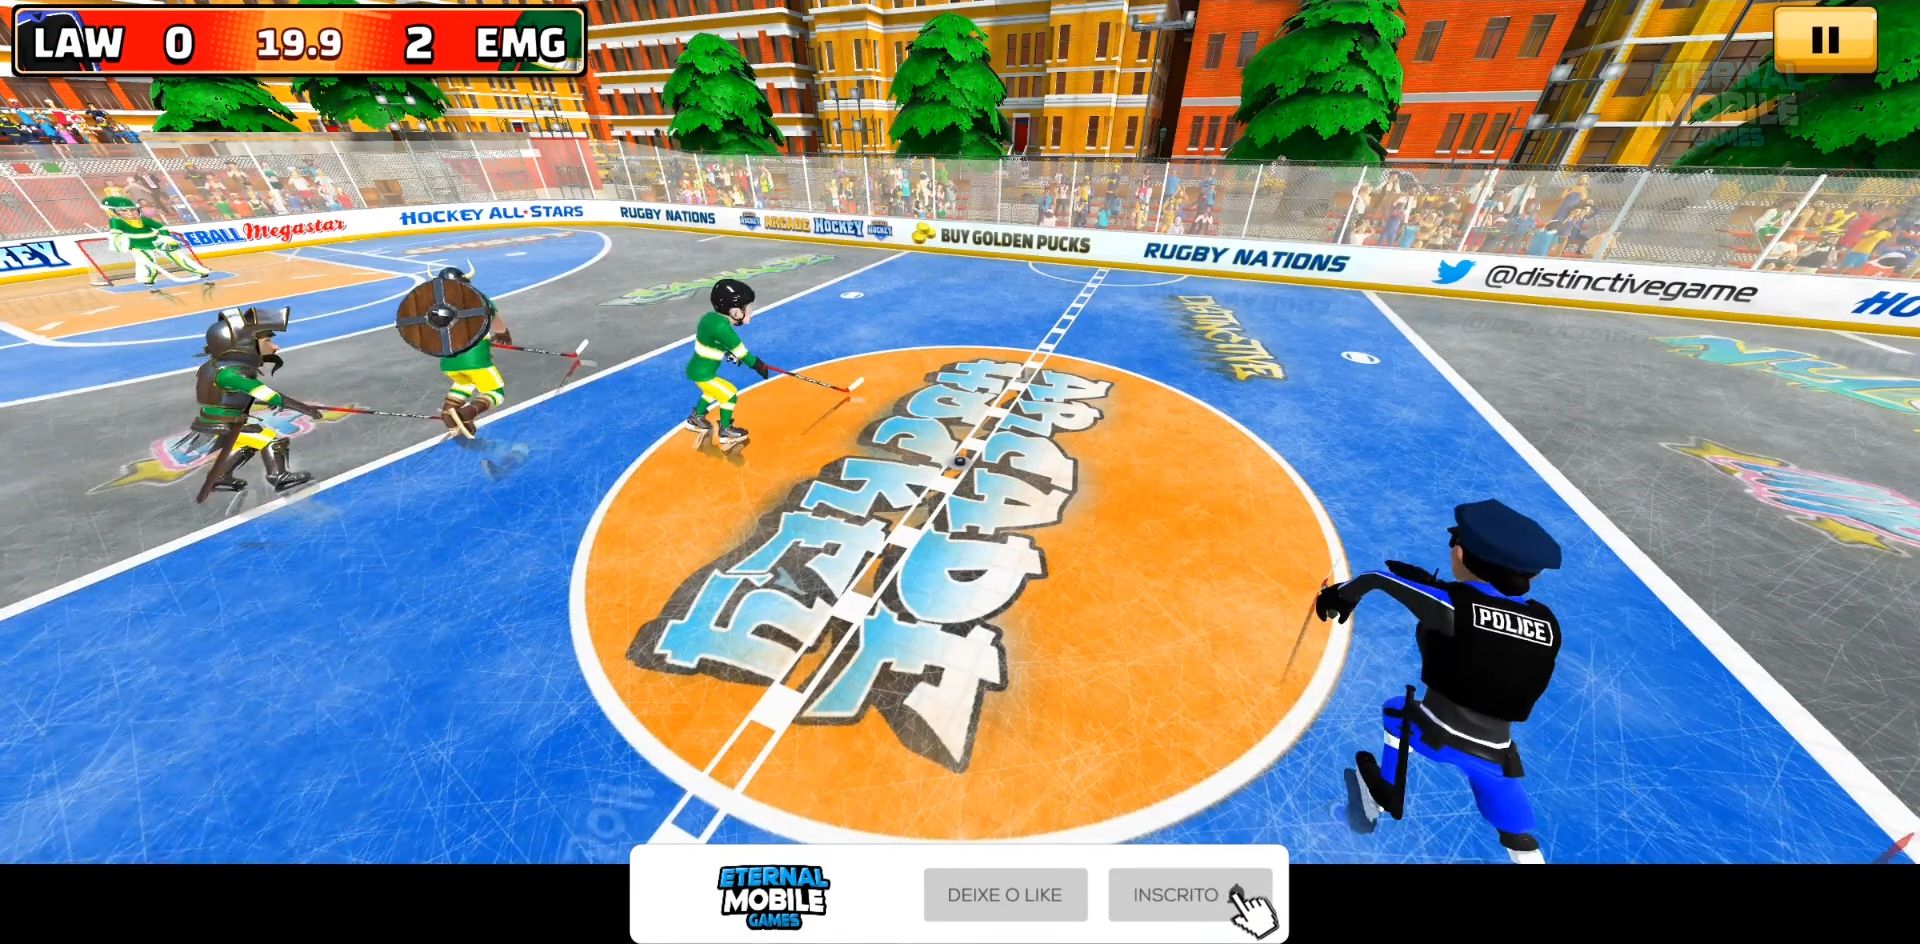 Arcade Hockey 21 captura de tela 1